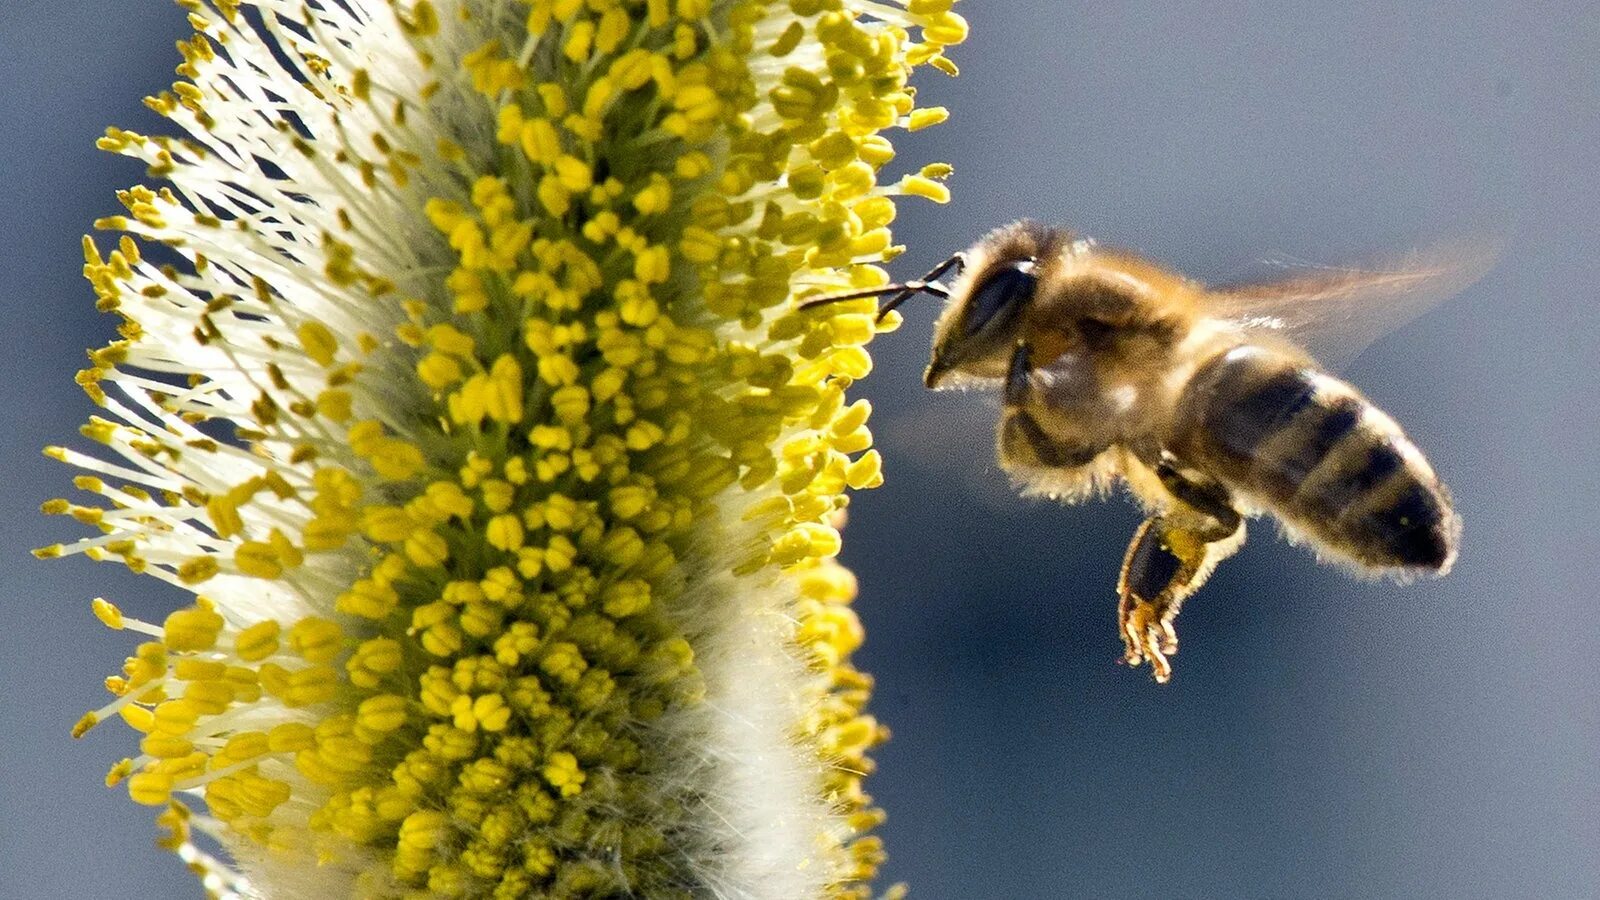 Пчелы на высадку. Медоносная пчела. Гималайская медоносная пчела. Медоносы для пчел. Пчела на цветке.